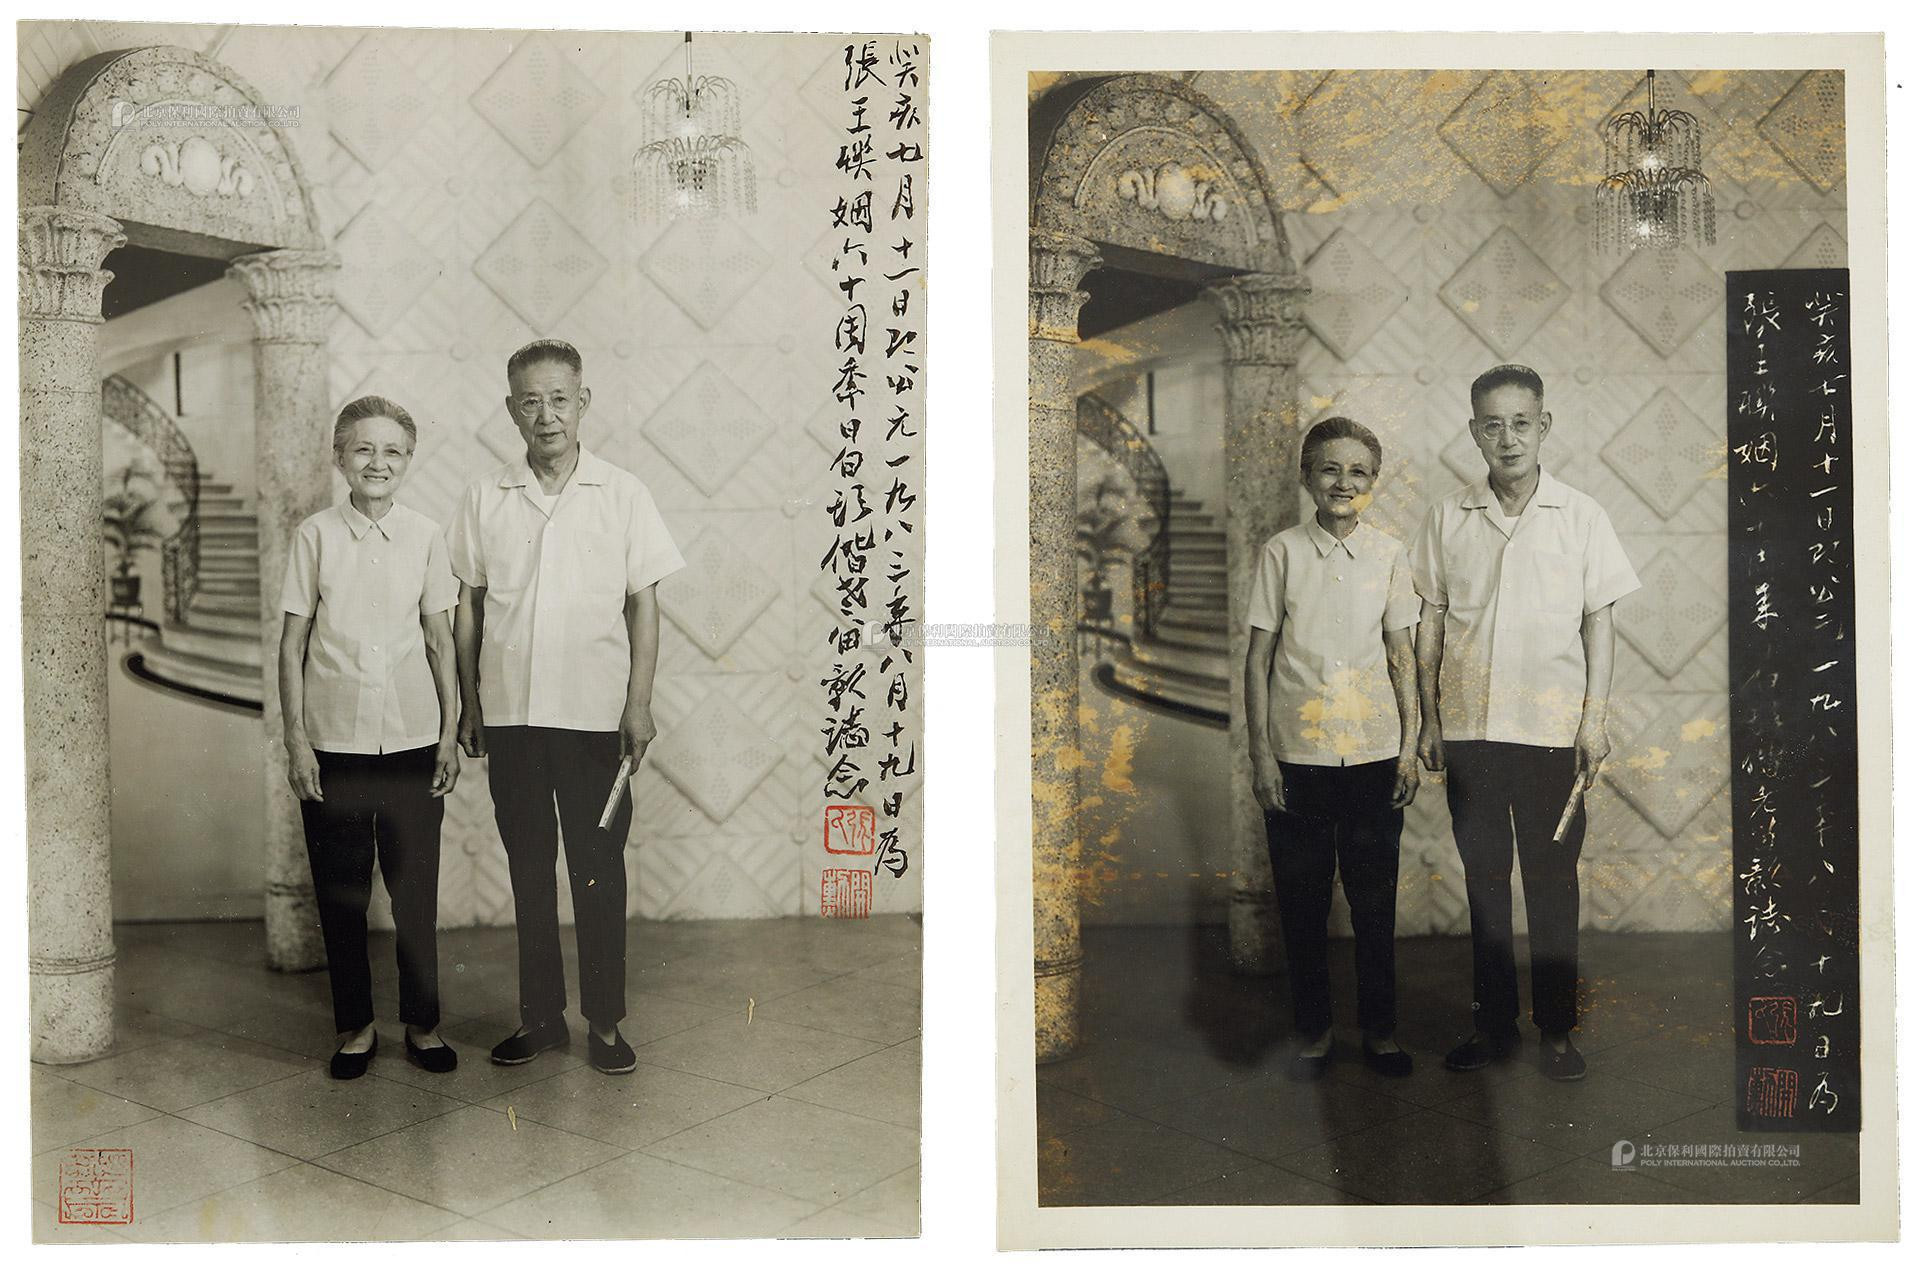 Two printed photos and postscript by Zhang Kaixun